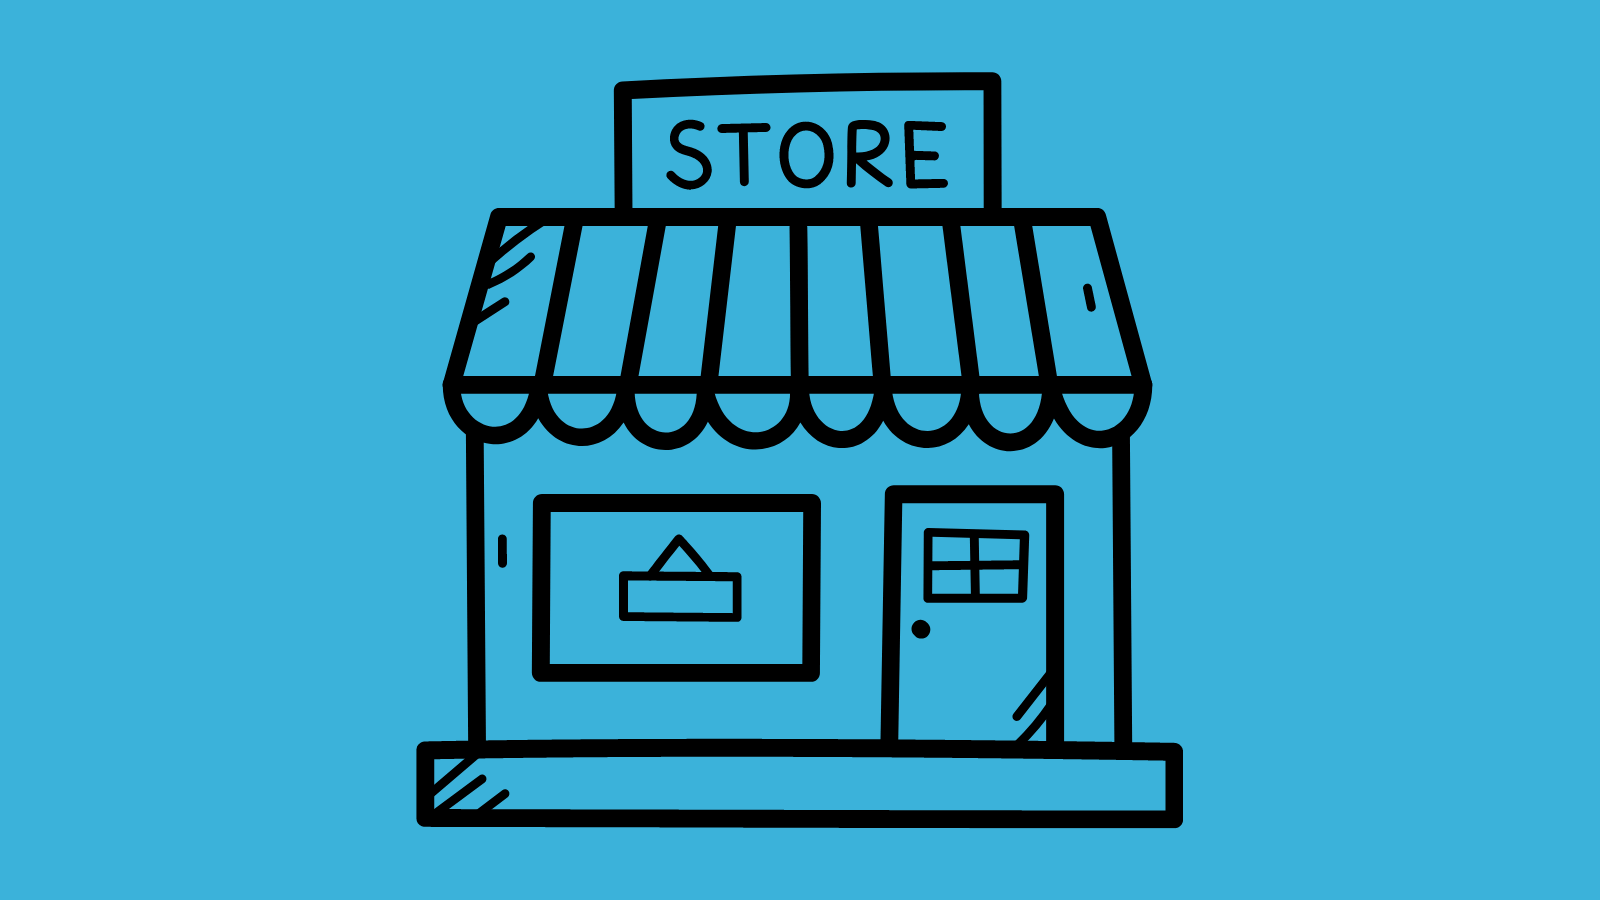 A minimalist illustration of a store